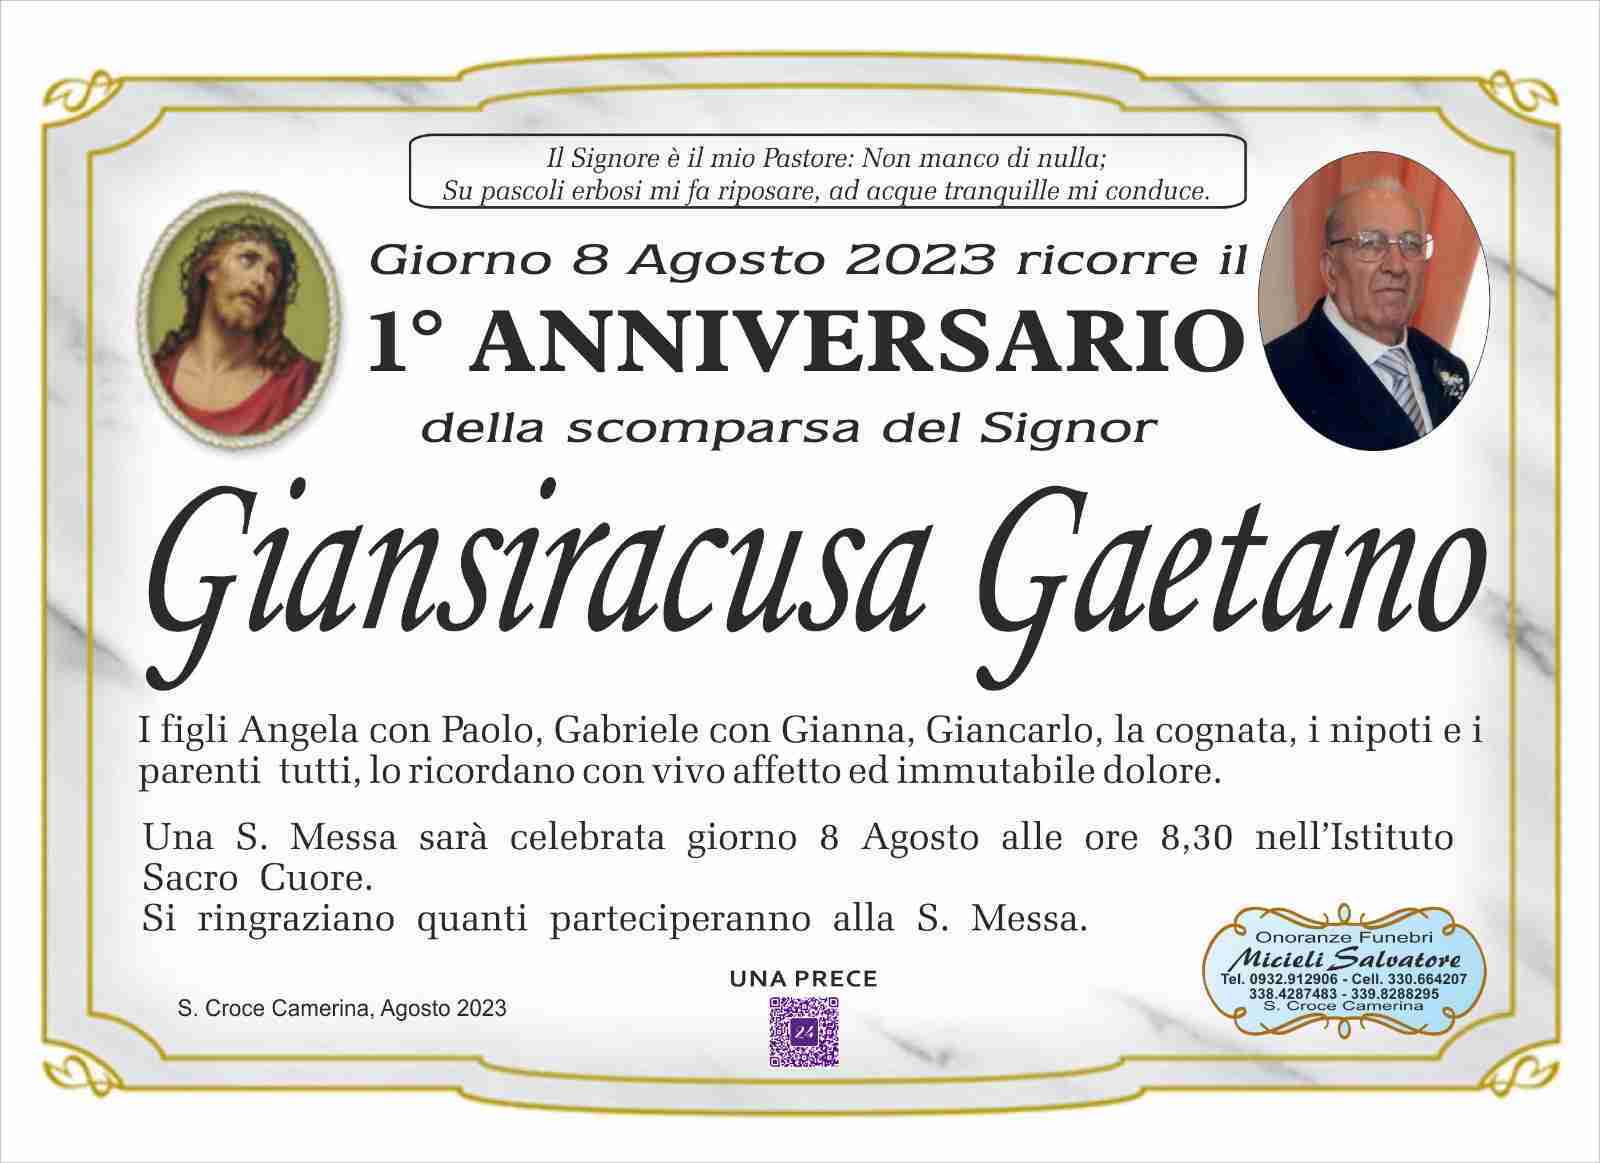 Gaetano Giansiracusa